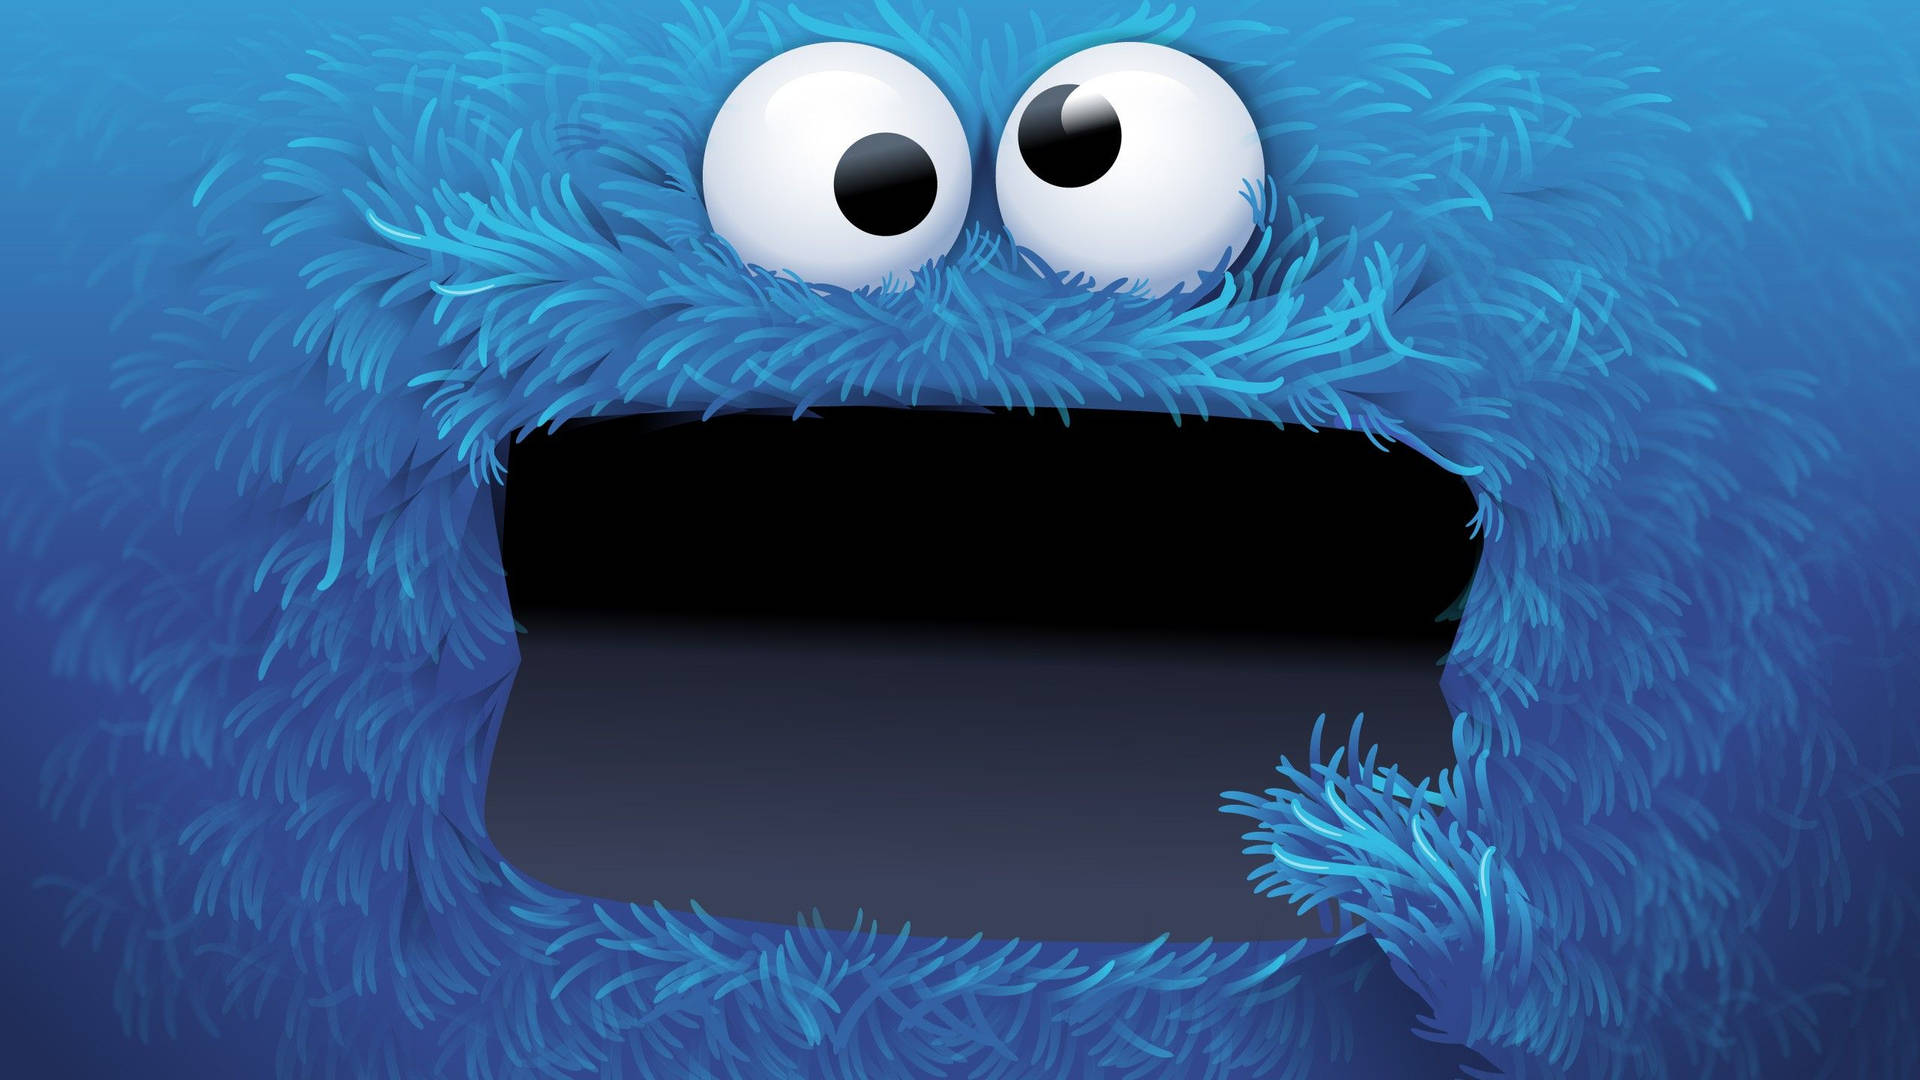 Cookie Monster Funny Cartoon Wallpaper